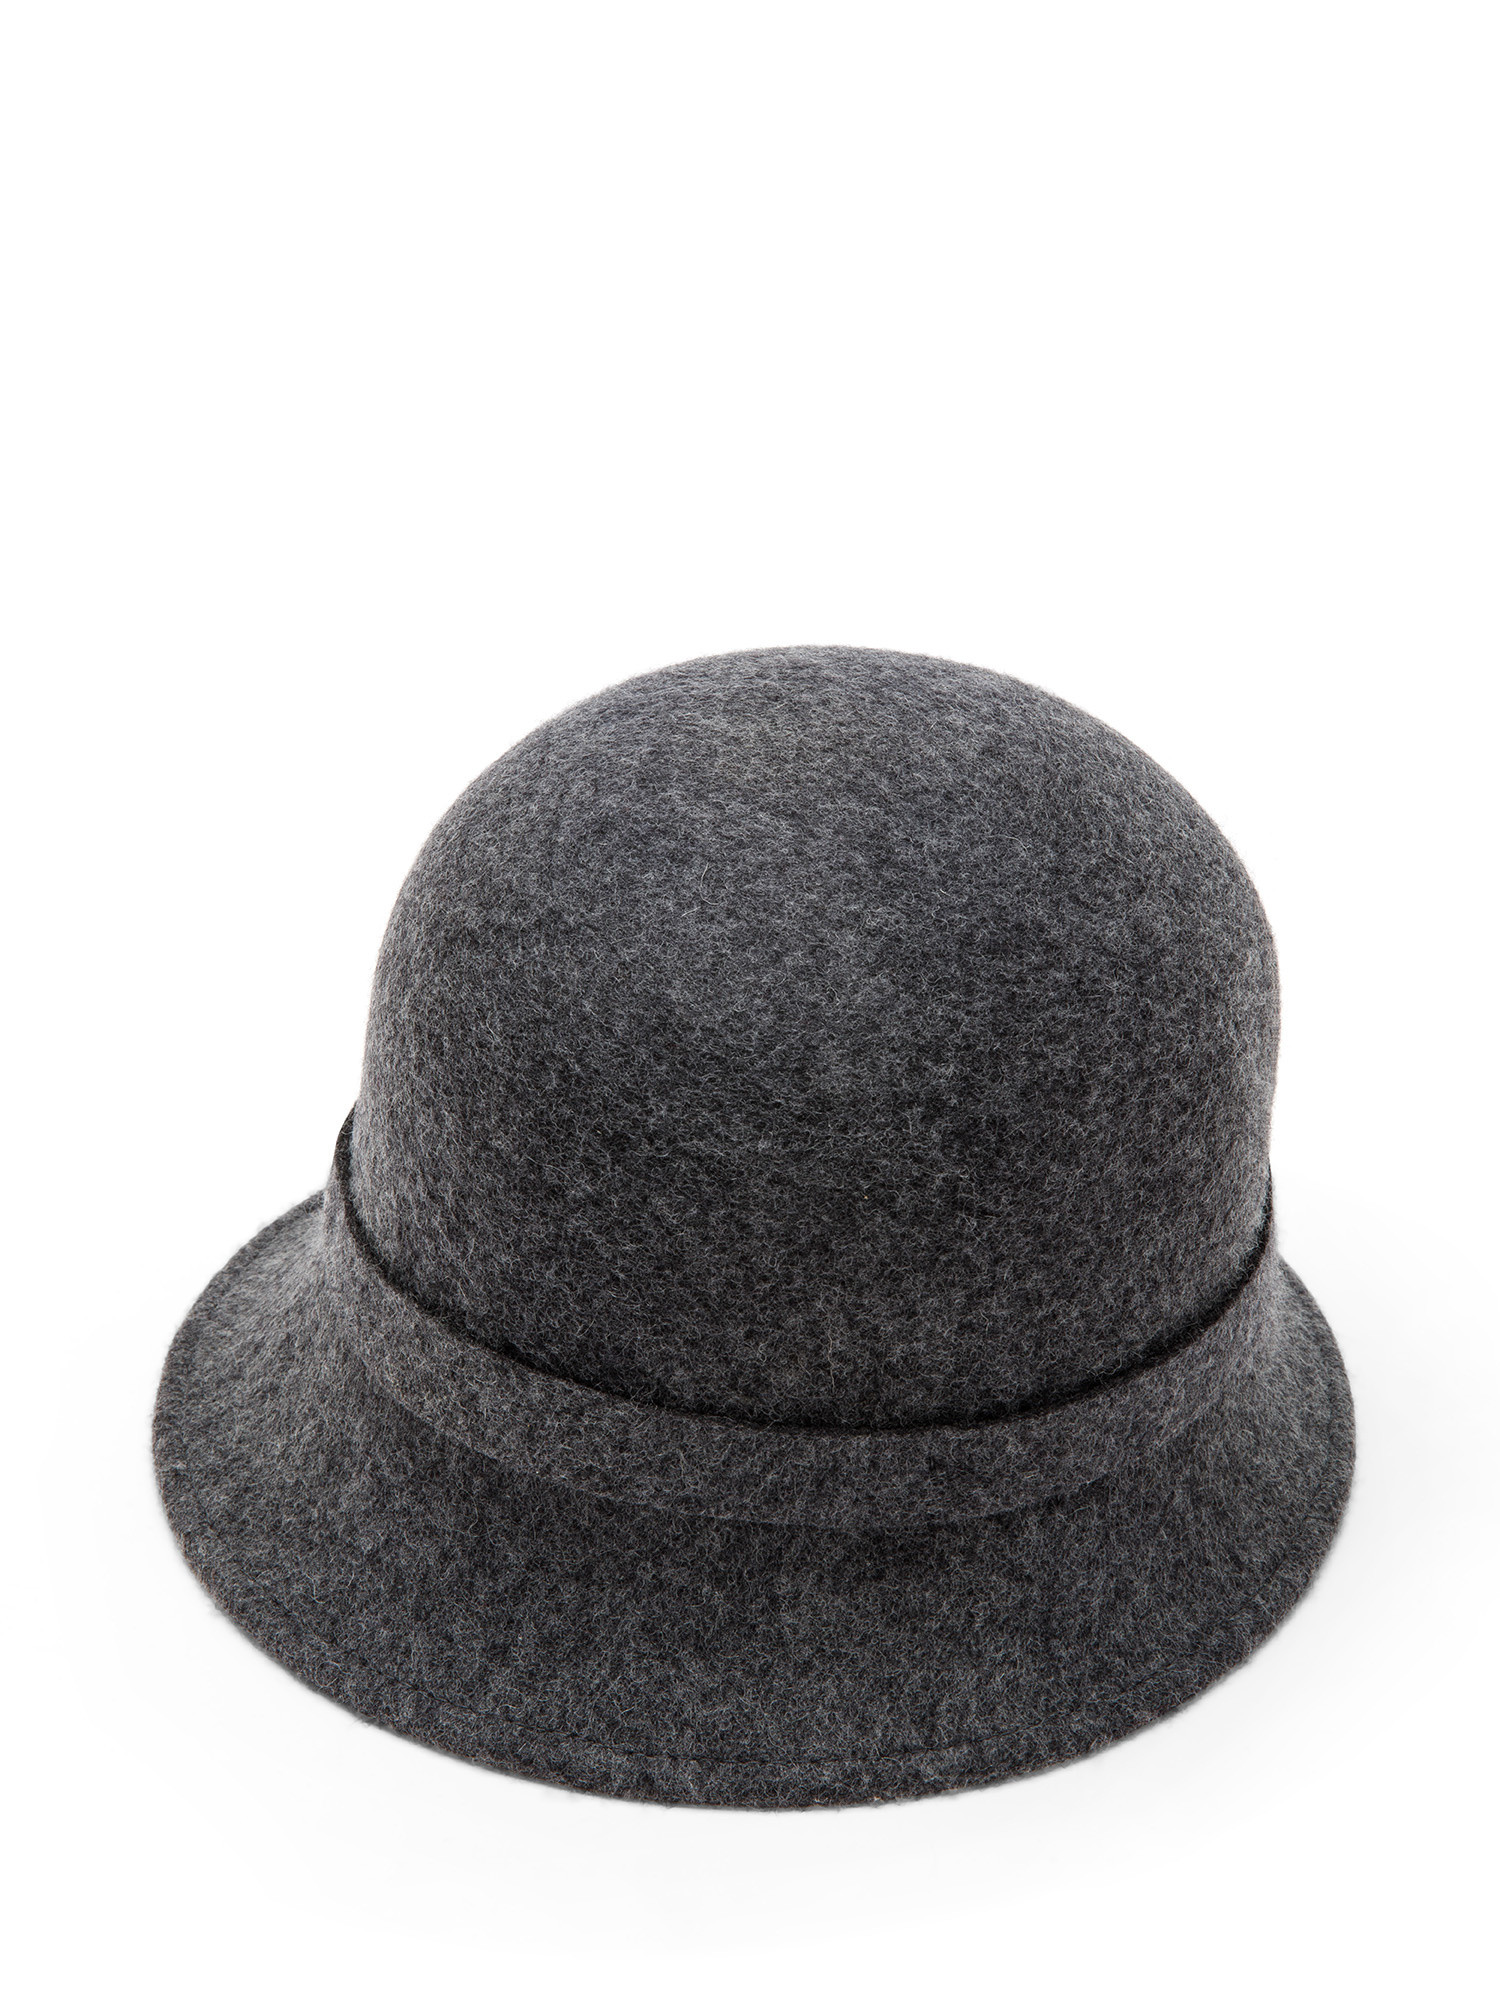 Koan - Hat with felt strap, Grey, large image number 0